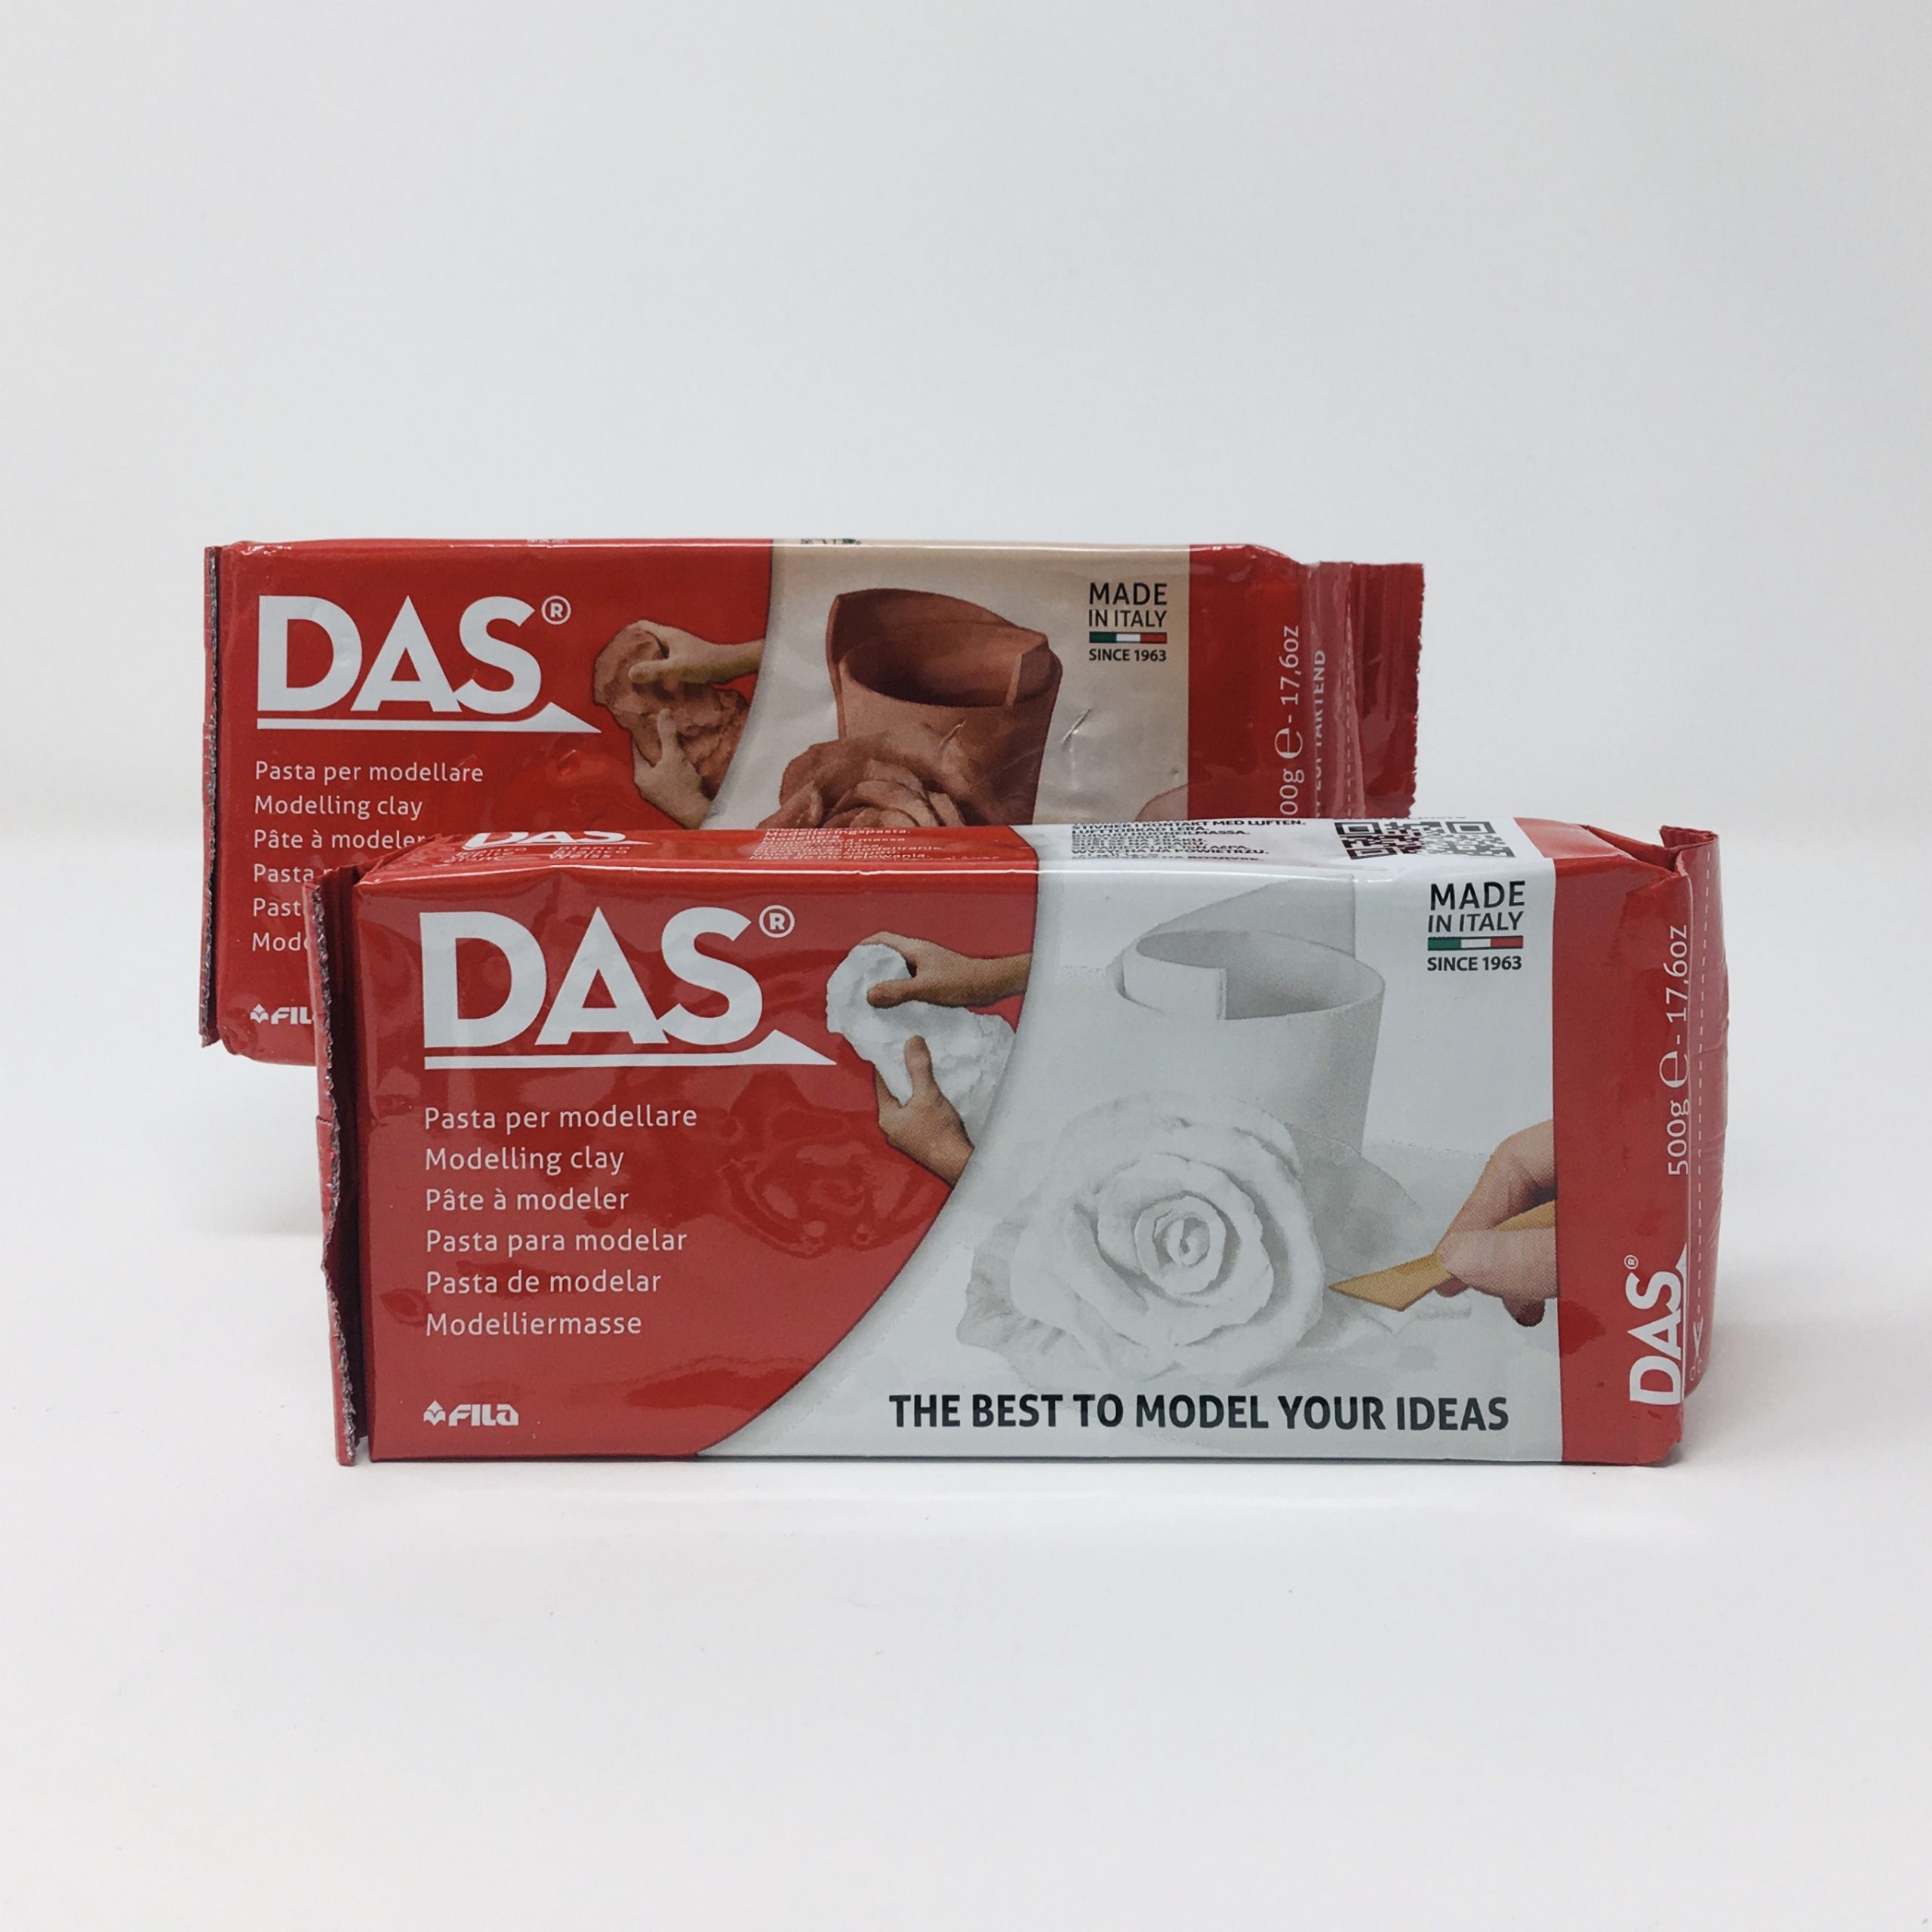 DAS Air drying modelling clay